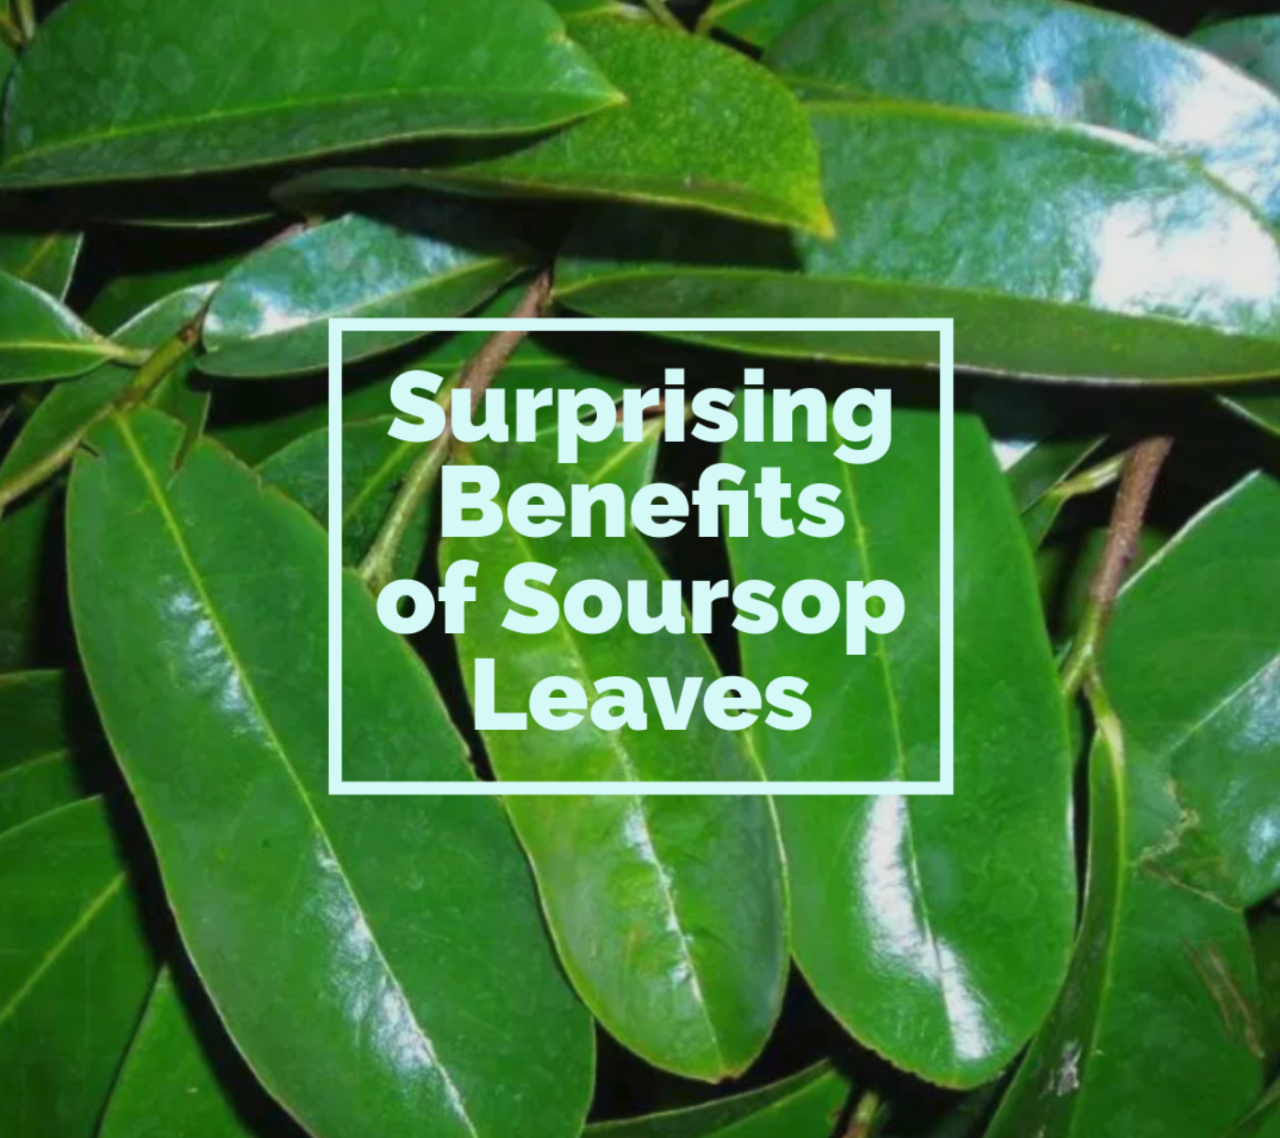 Soursop leaves benefits